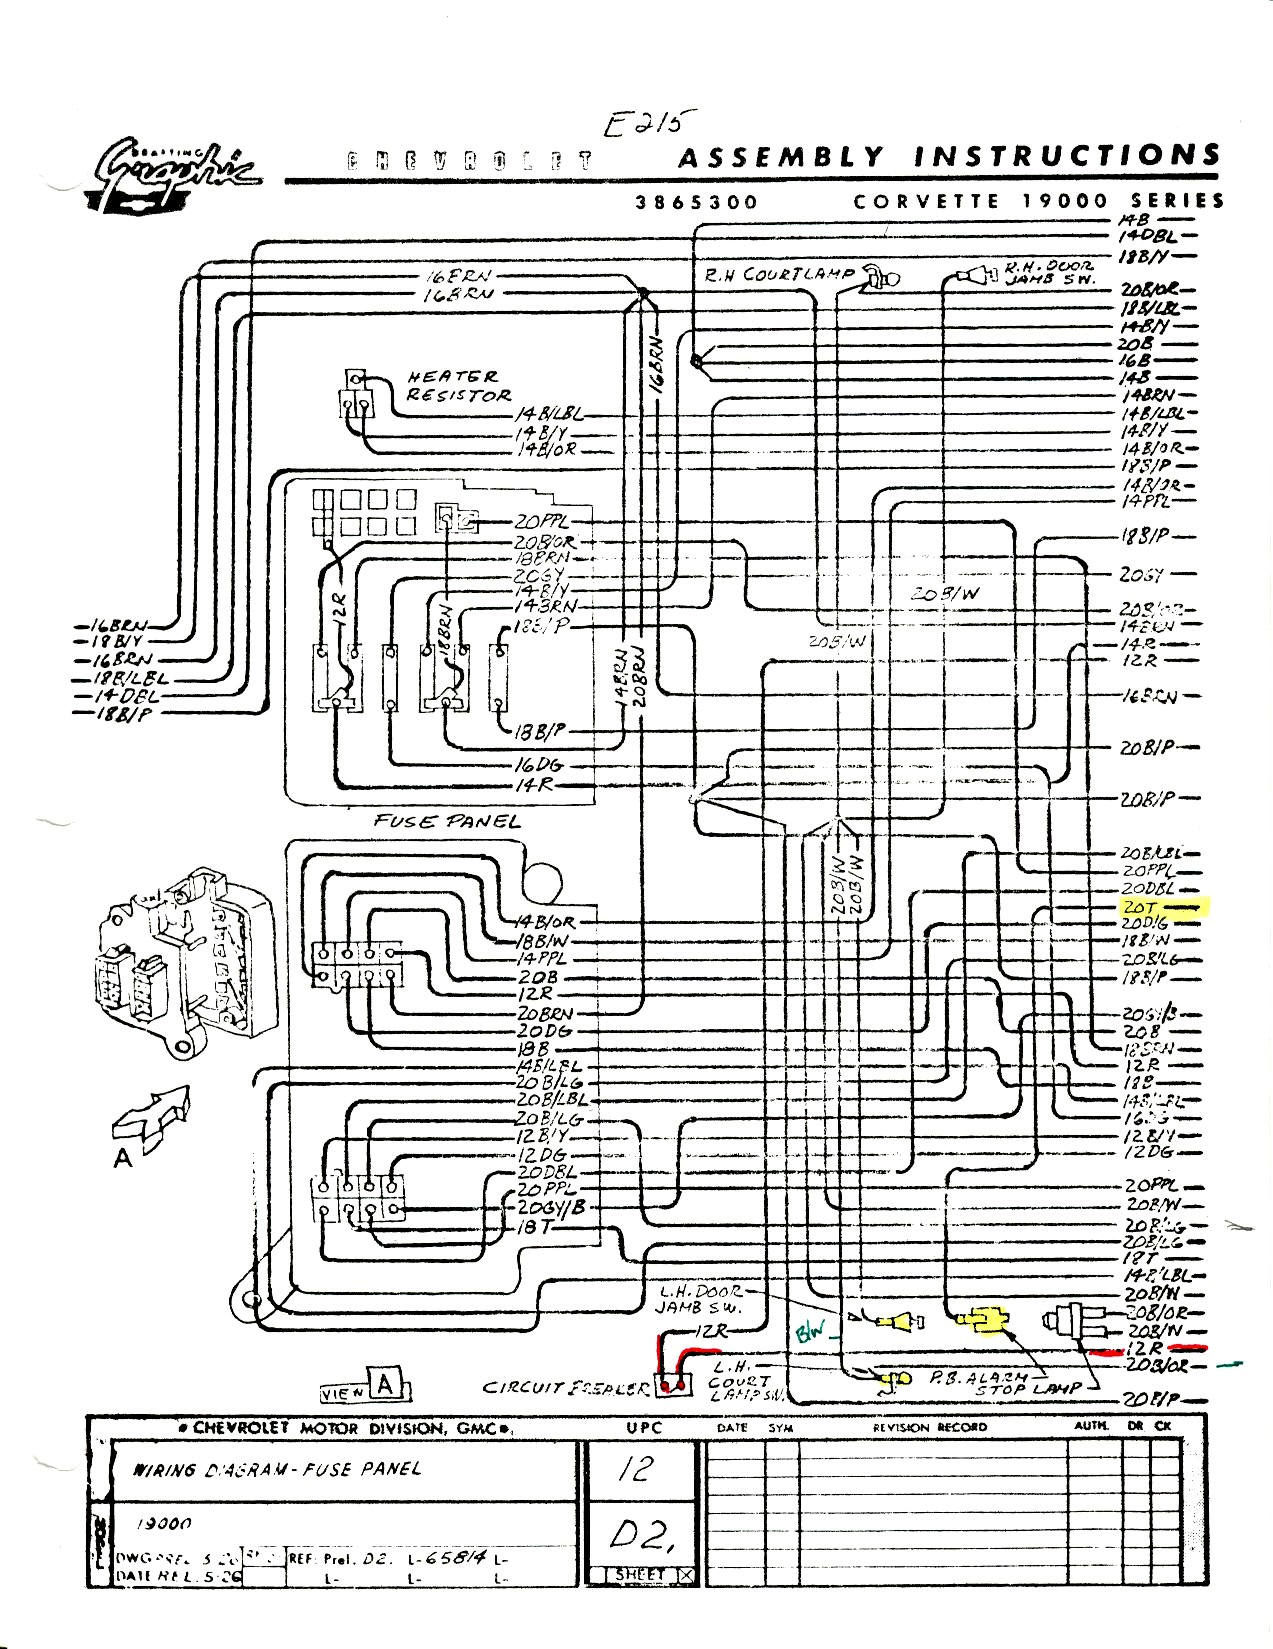 I need a 1965 wiring diagram - CorvetteForum - Chevrolet ... corvette c6 bcm wiring diagram 